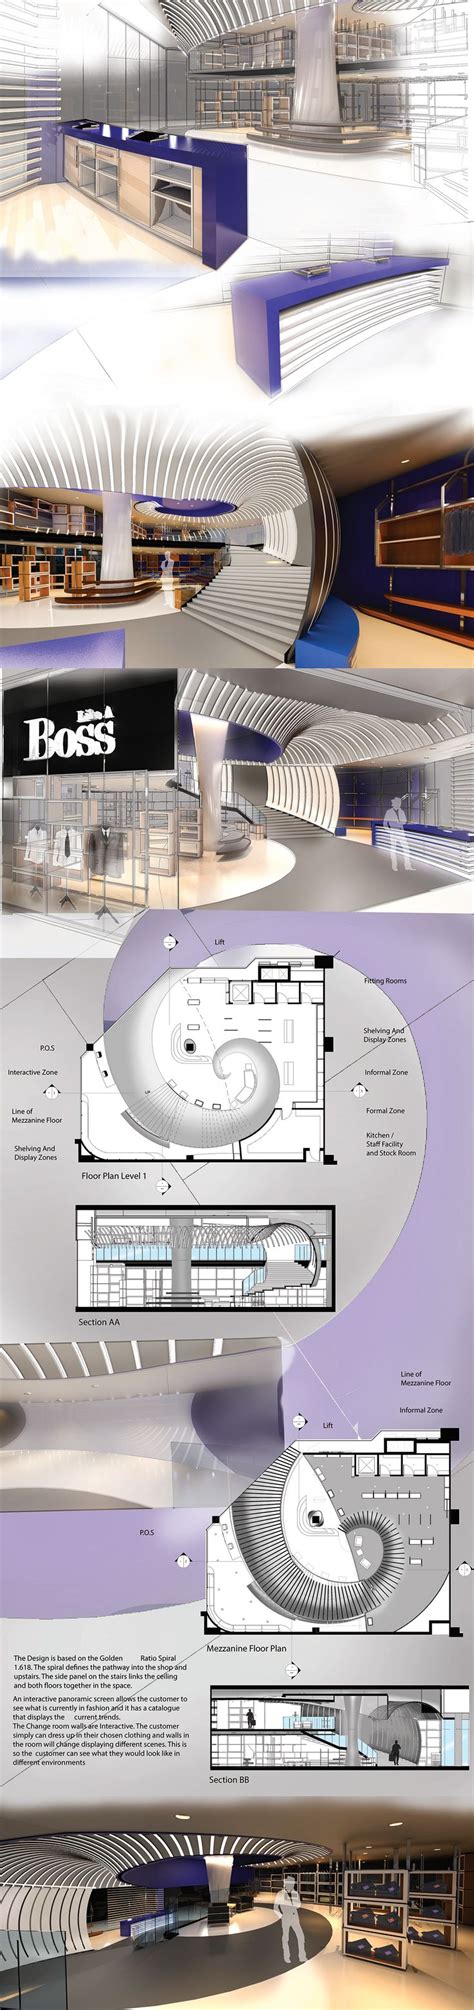 Retail Store Design Concept On Behance Retail Store Design Concept